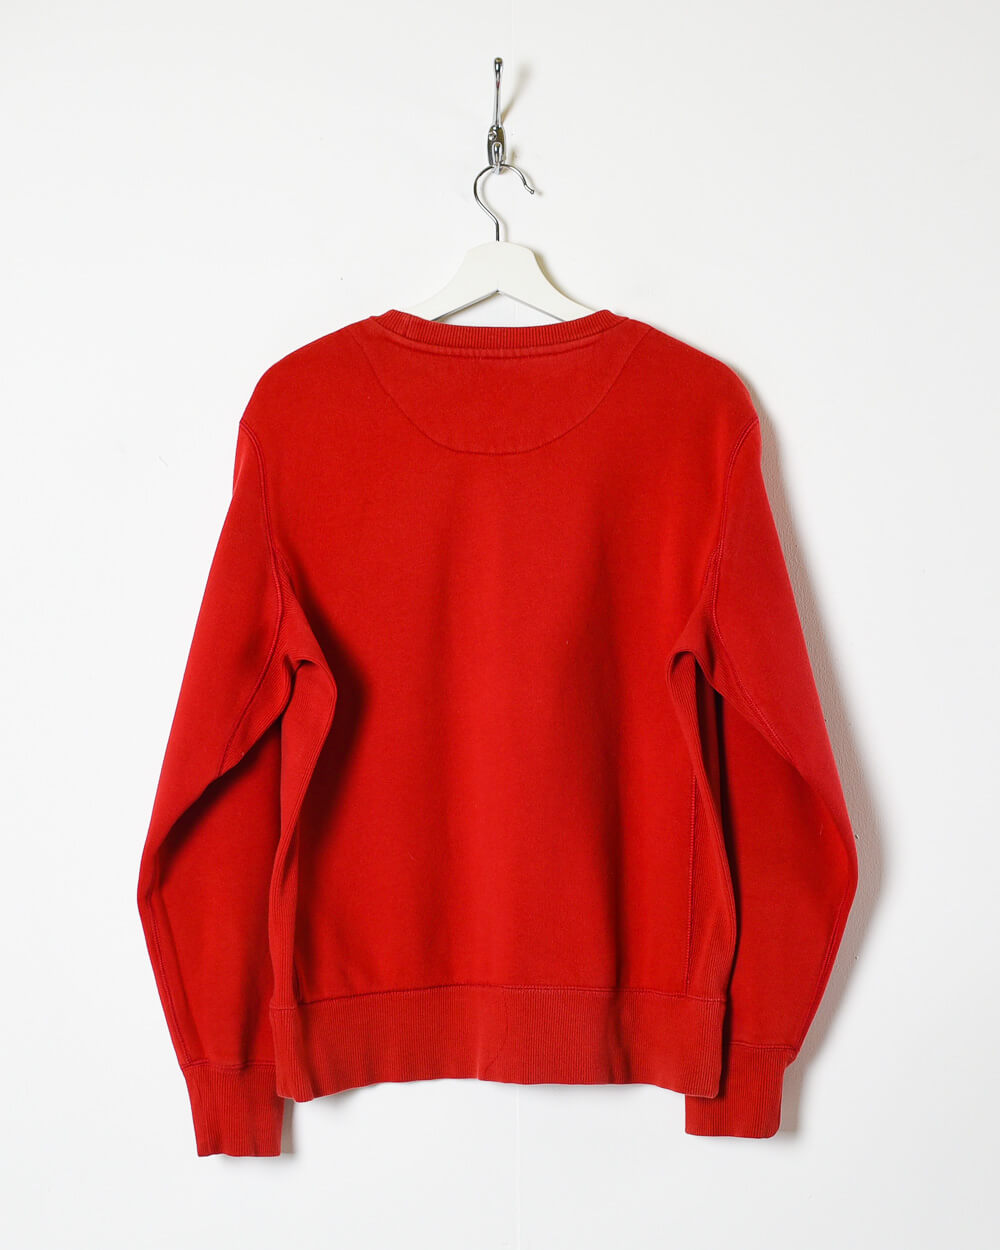 Vintage Nike Air Sport Red Vintage Sweatshirt White Label USA sz Medium M